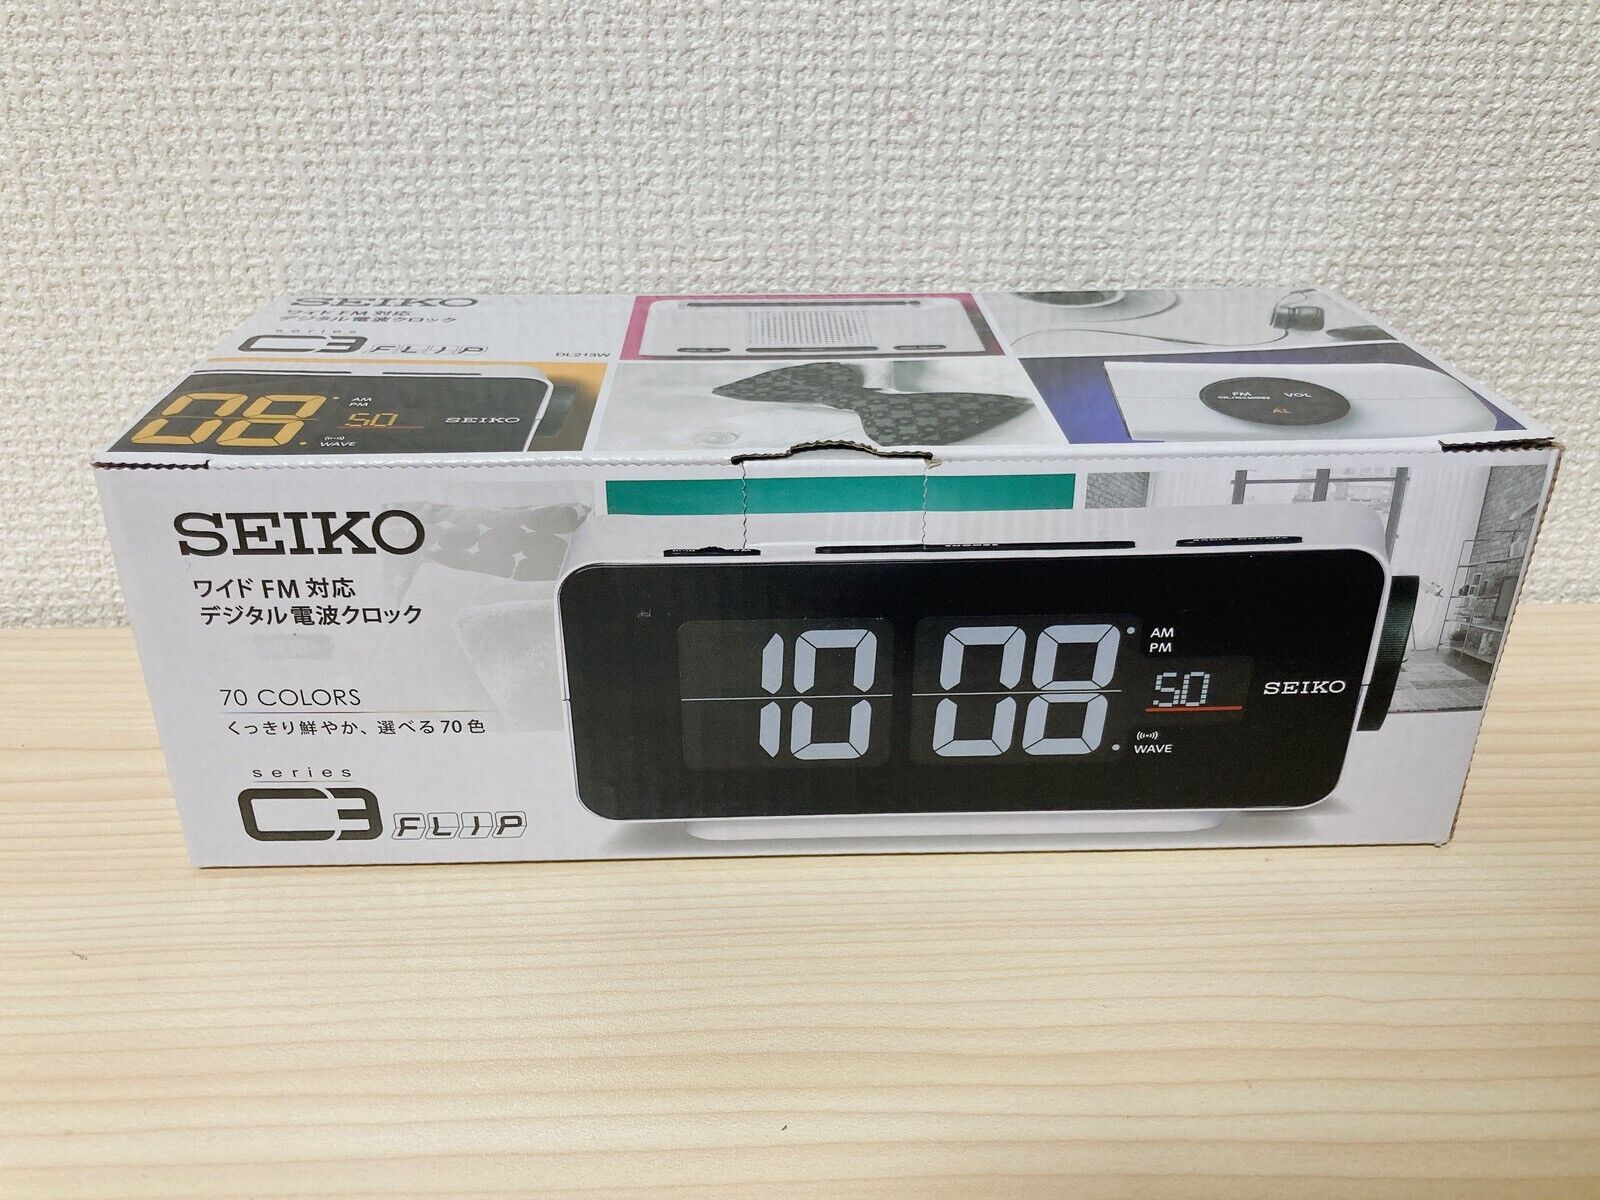 SEIKO Digital Flip alarm clock C3 DL213W White New Unopened Vintage style